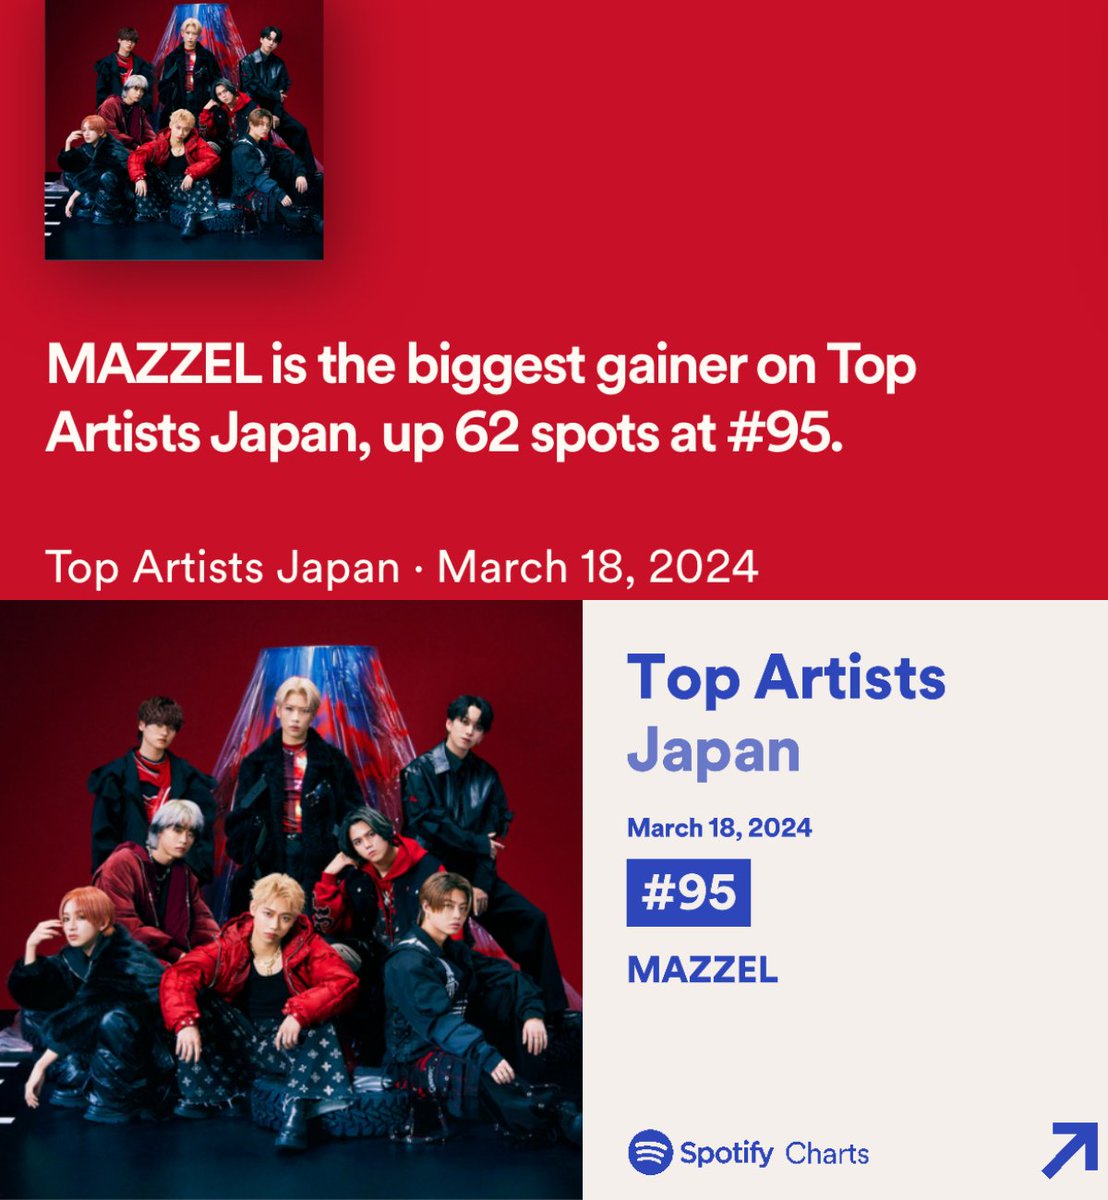 #MUZE_Spotify 
Daily Top Artists Japan (3/18)

MAZZEL 95位(↑62)  
前日のRe-Entry157位から62upです！

曲をたくさん聴いていきましょう
🔗open.spotify.com/intl-ja/artist…

#MAZZEL